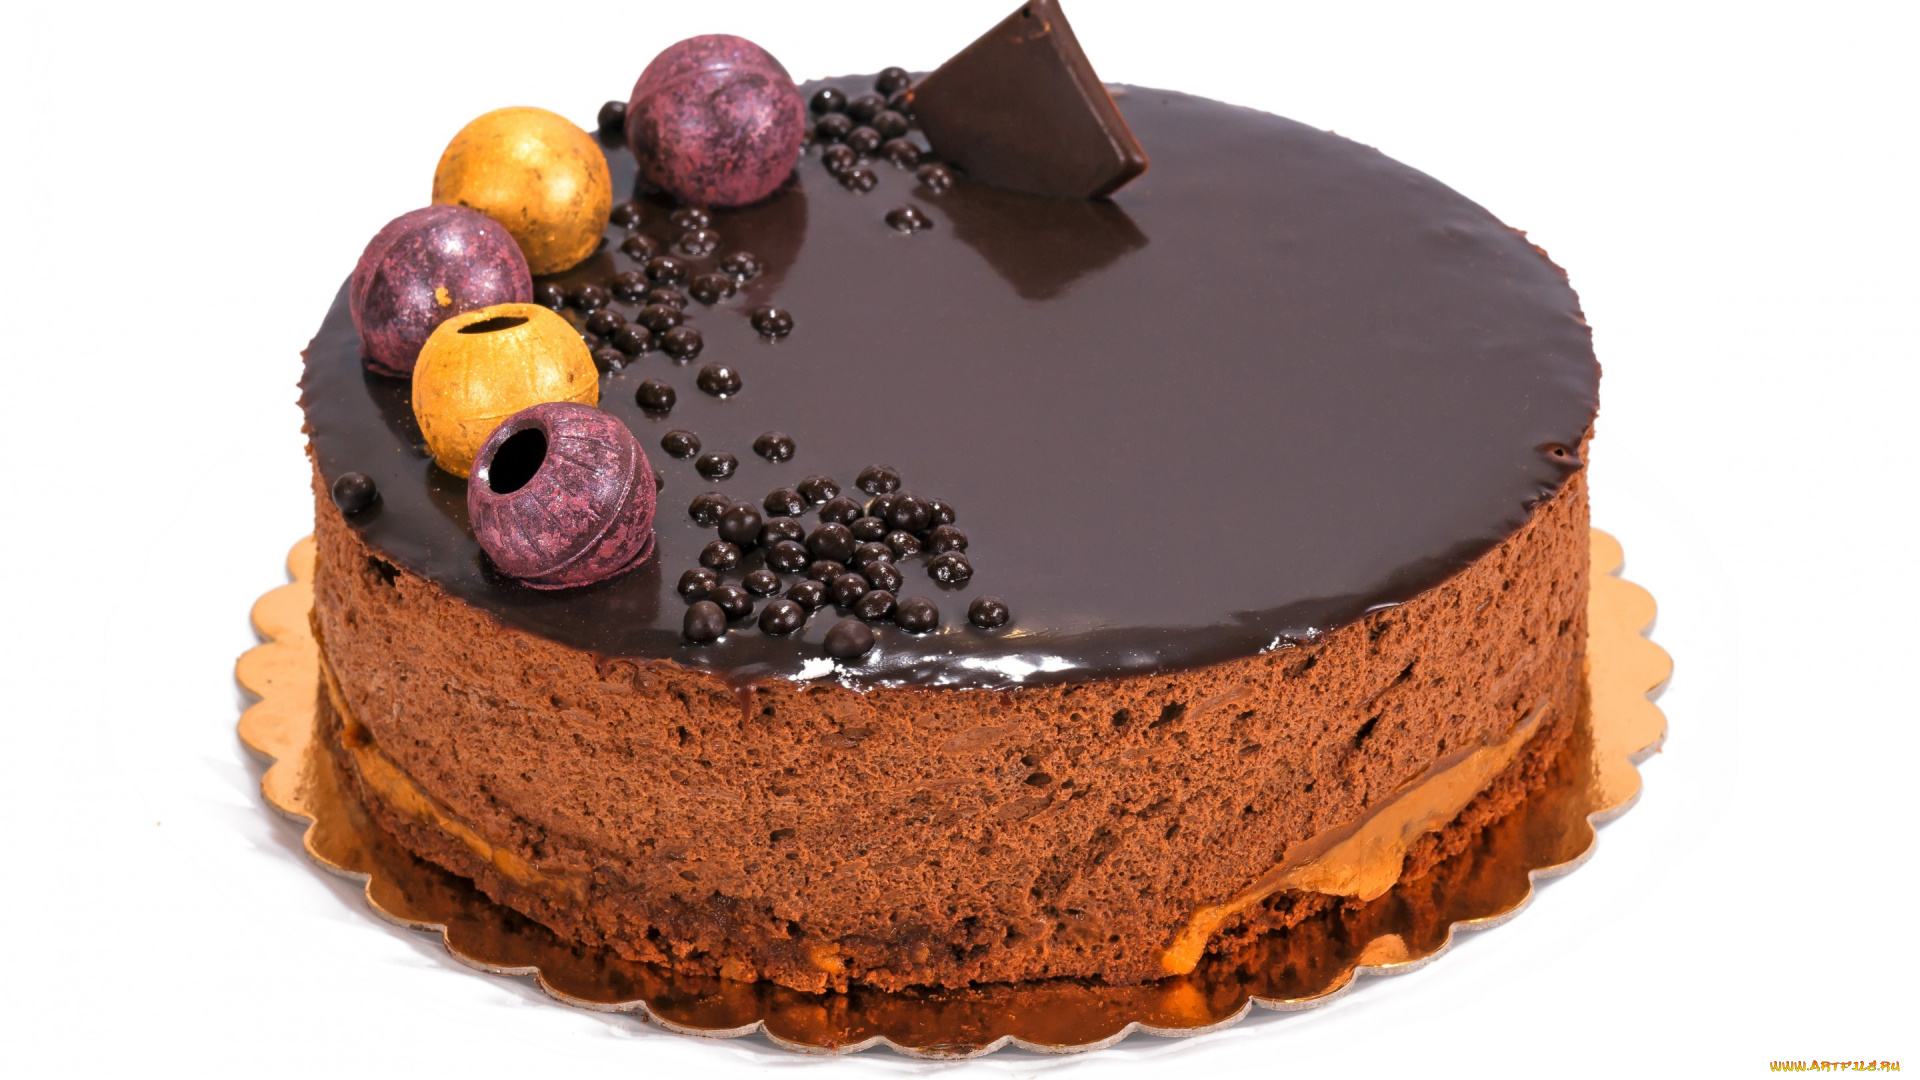 еда, торты, шоколад, бисквит, глазурь, chocolate, десерт, sweets, выпечка, cakes, торт